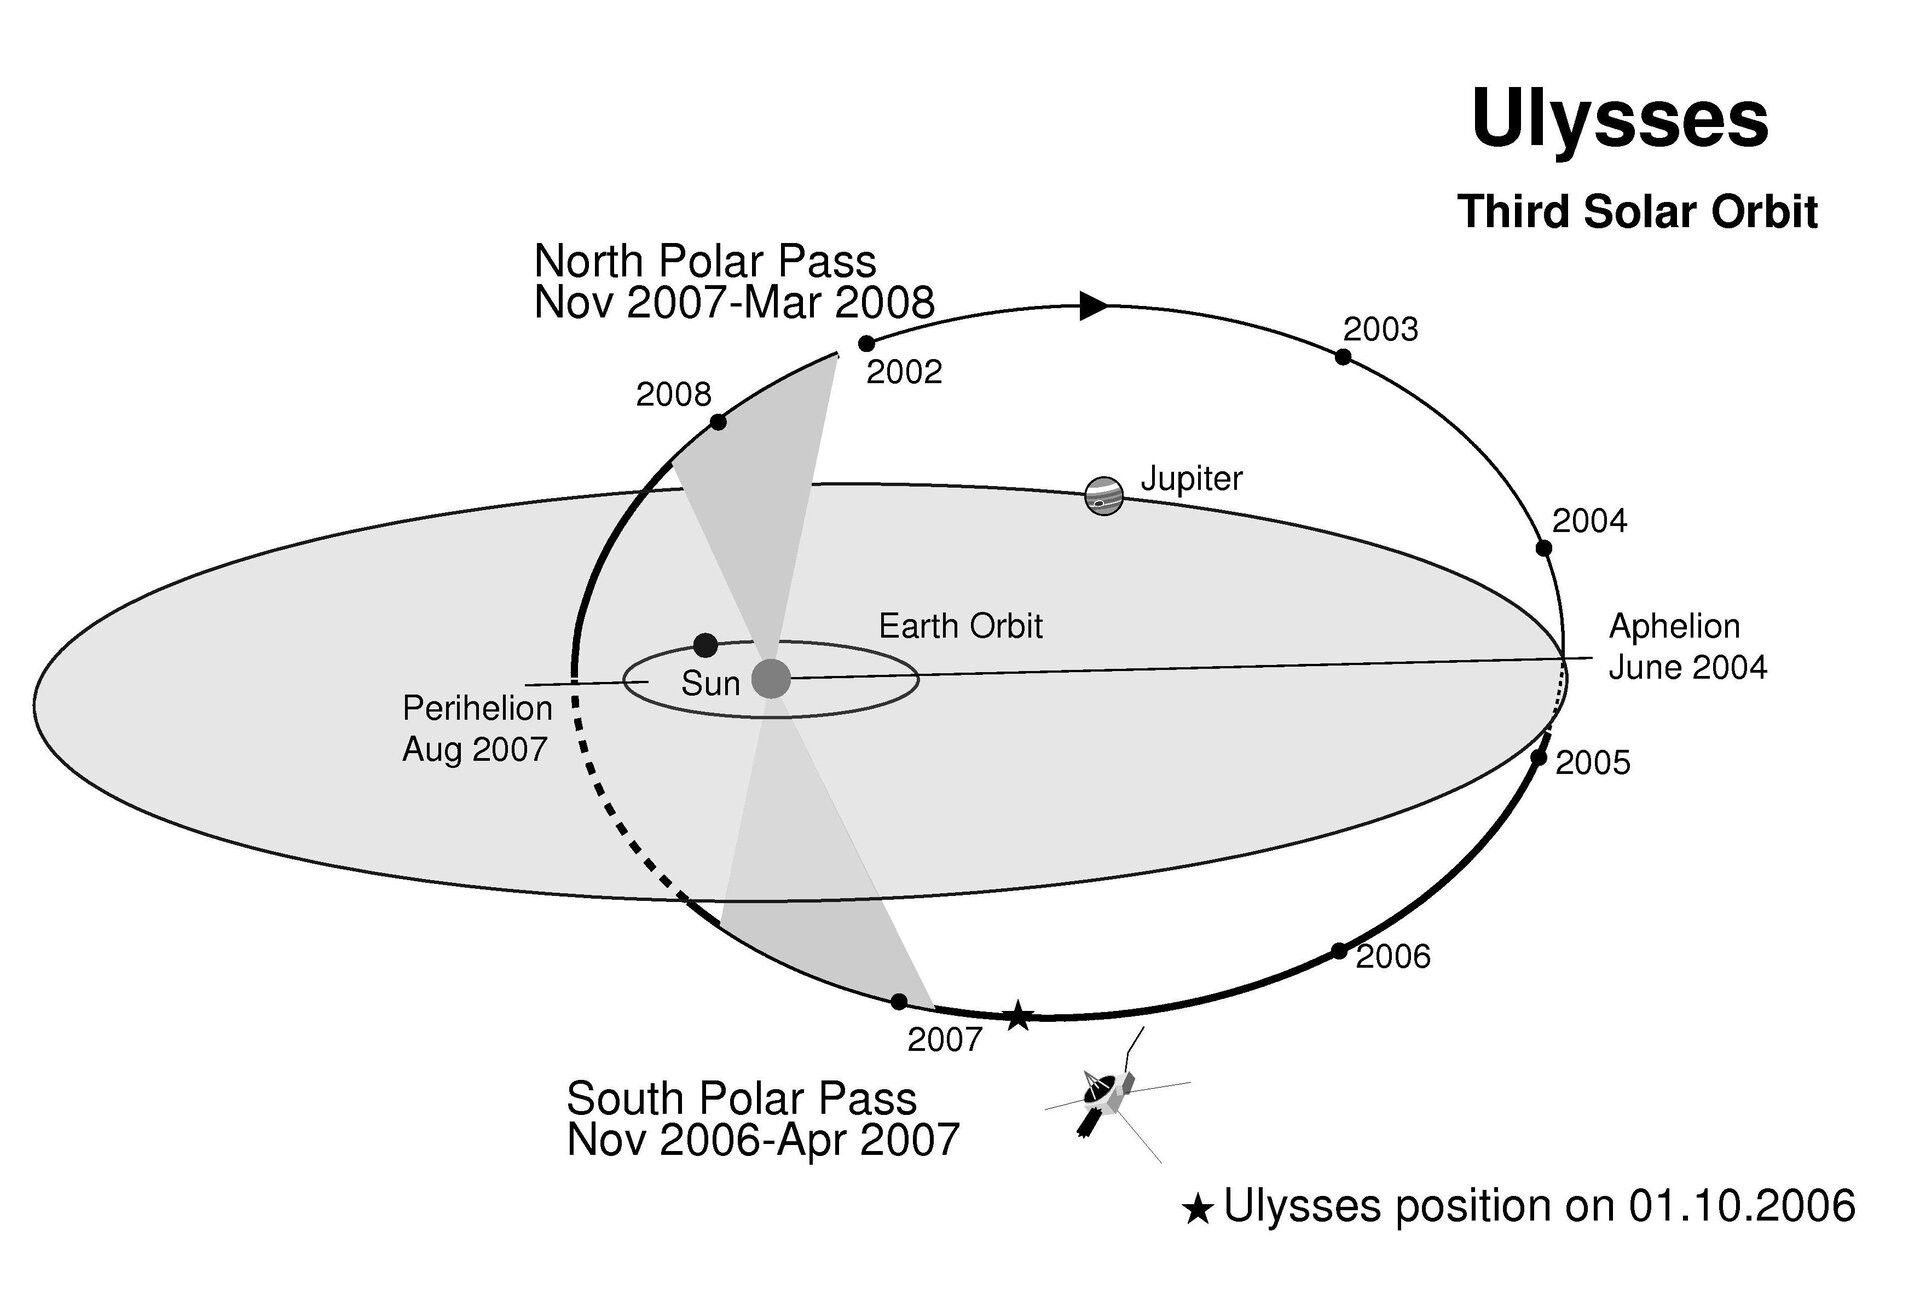 Ulysses' third solar orbit